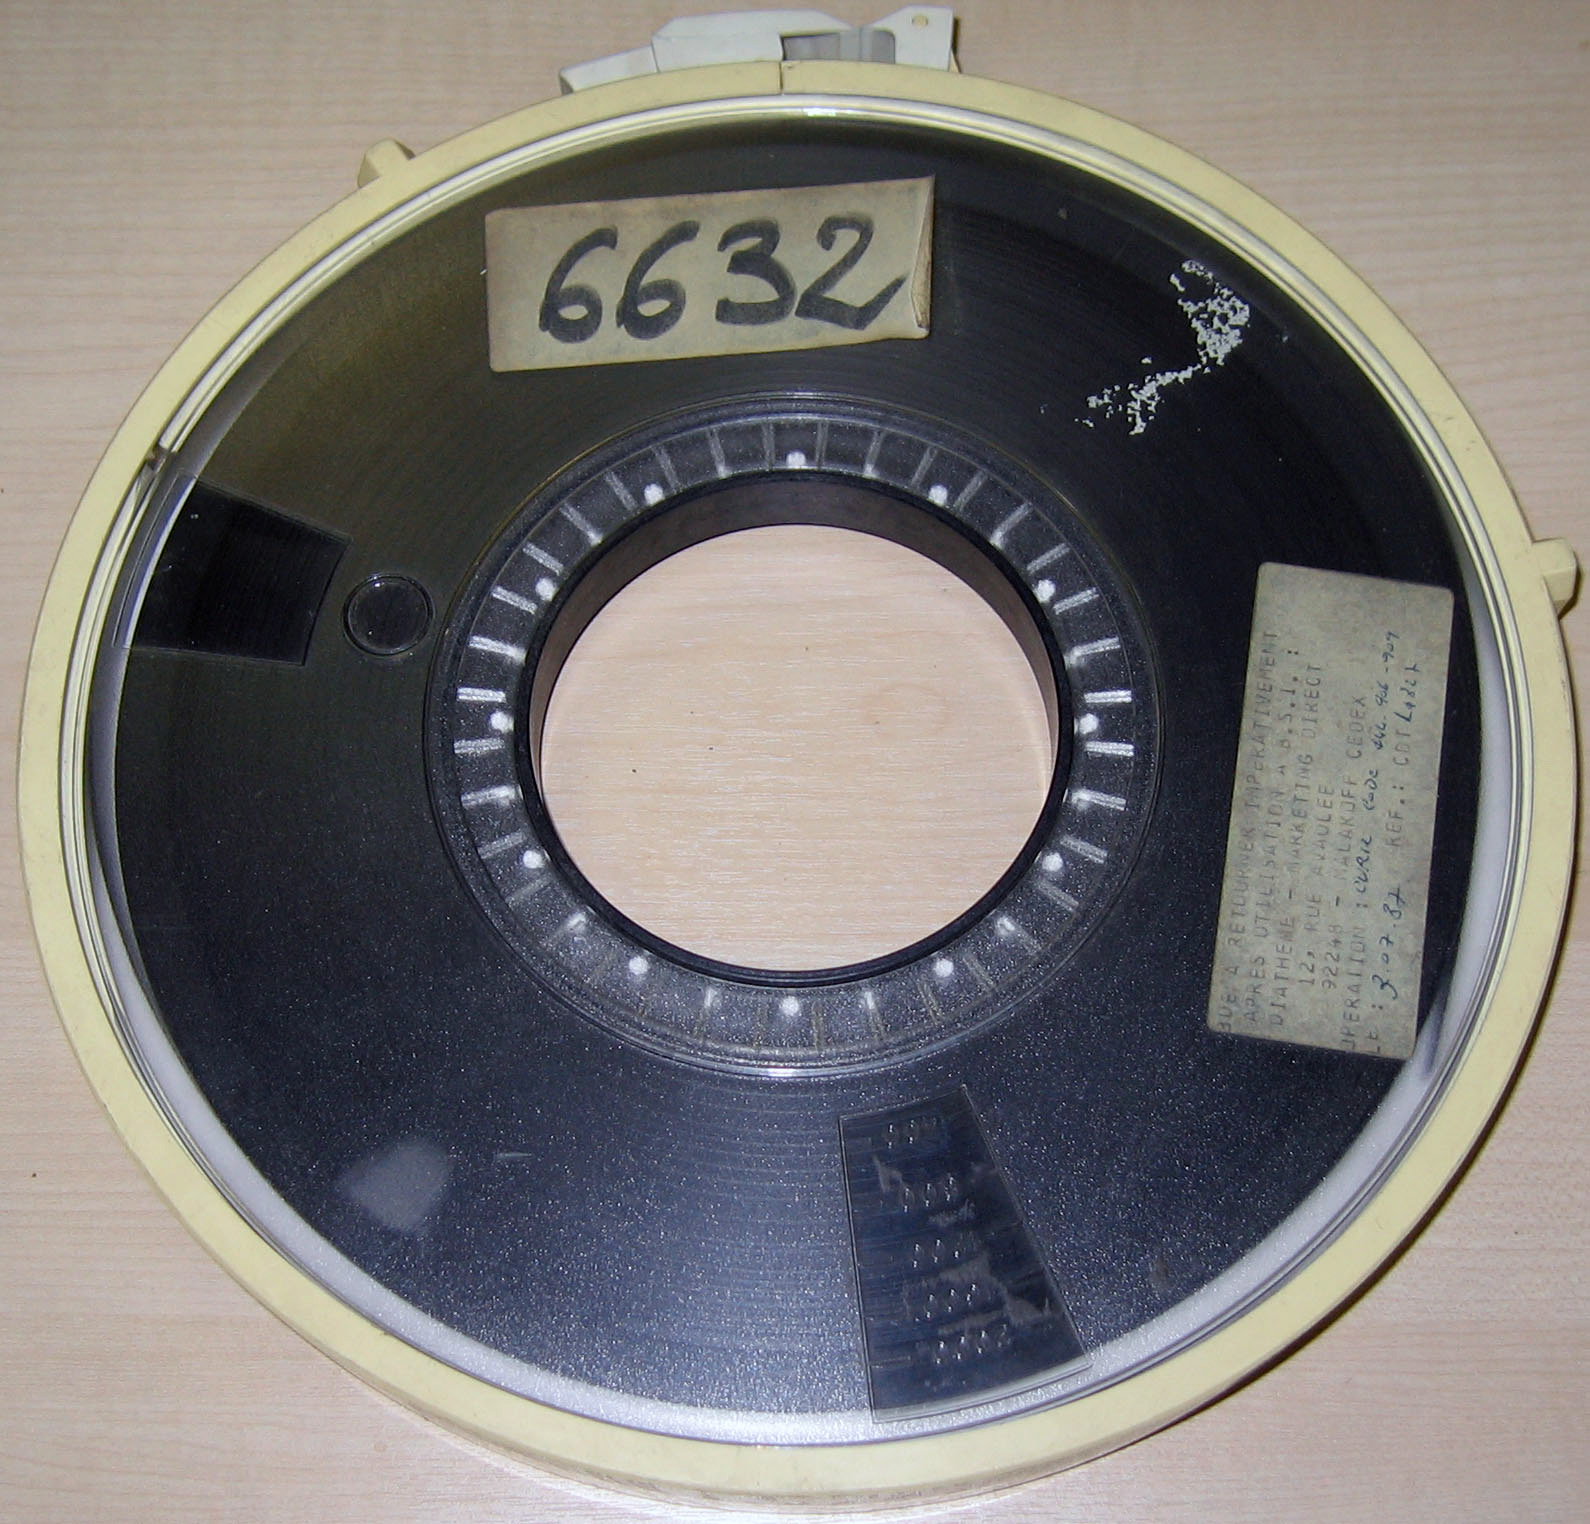 _10 1⁄2-inch (270 mm) diameter reel of 9-track tape [Source: Wikipedia](https://commons.wikimedia.org/wiki/File:Largetape.jpg)_